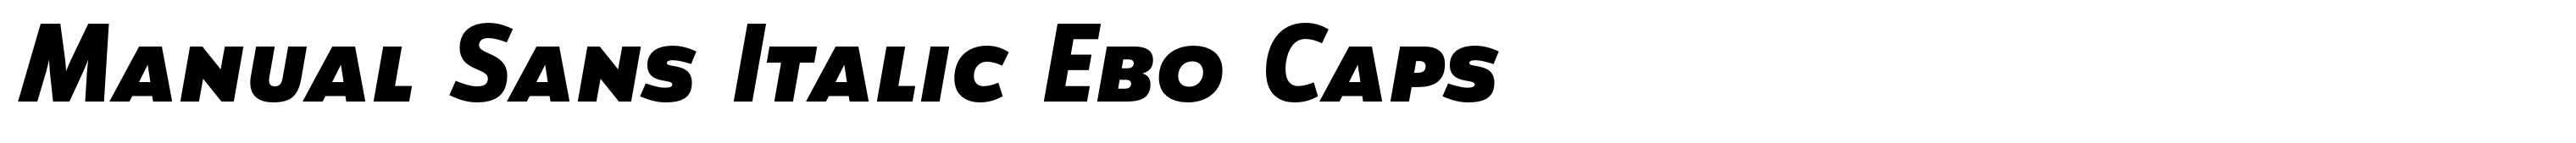 Manual Sans Italic Ebo Caps